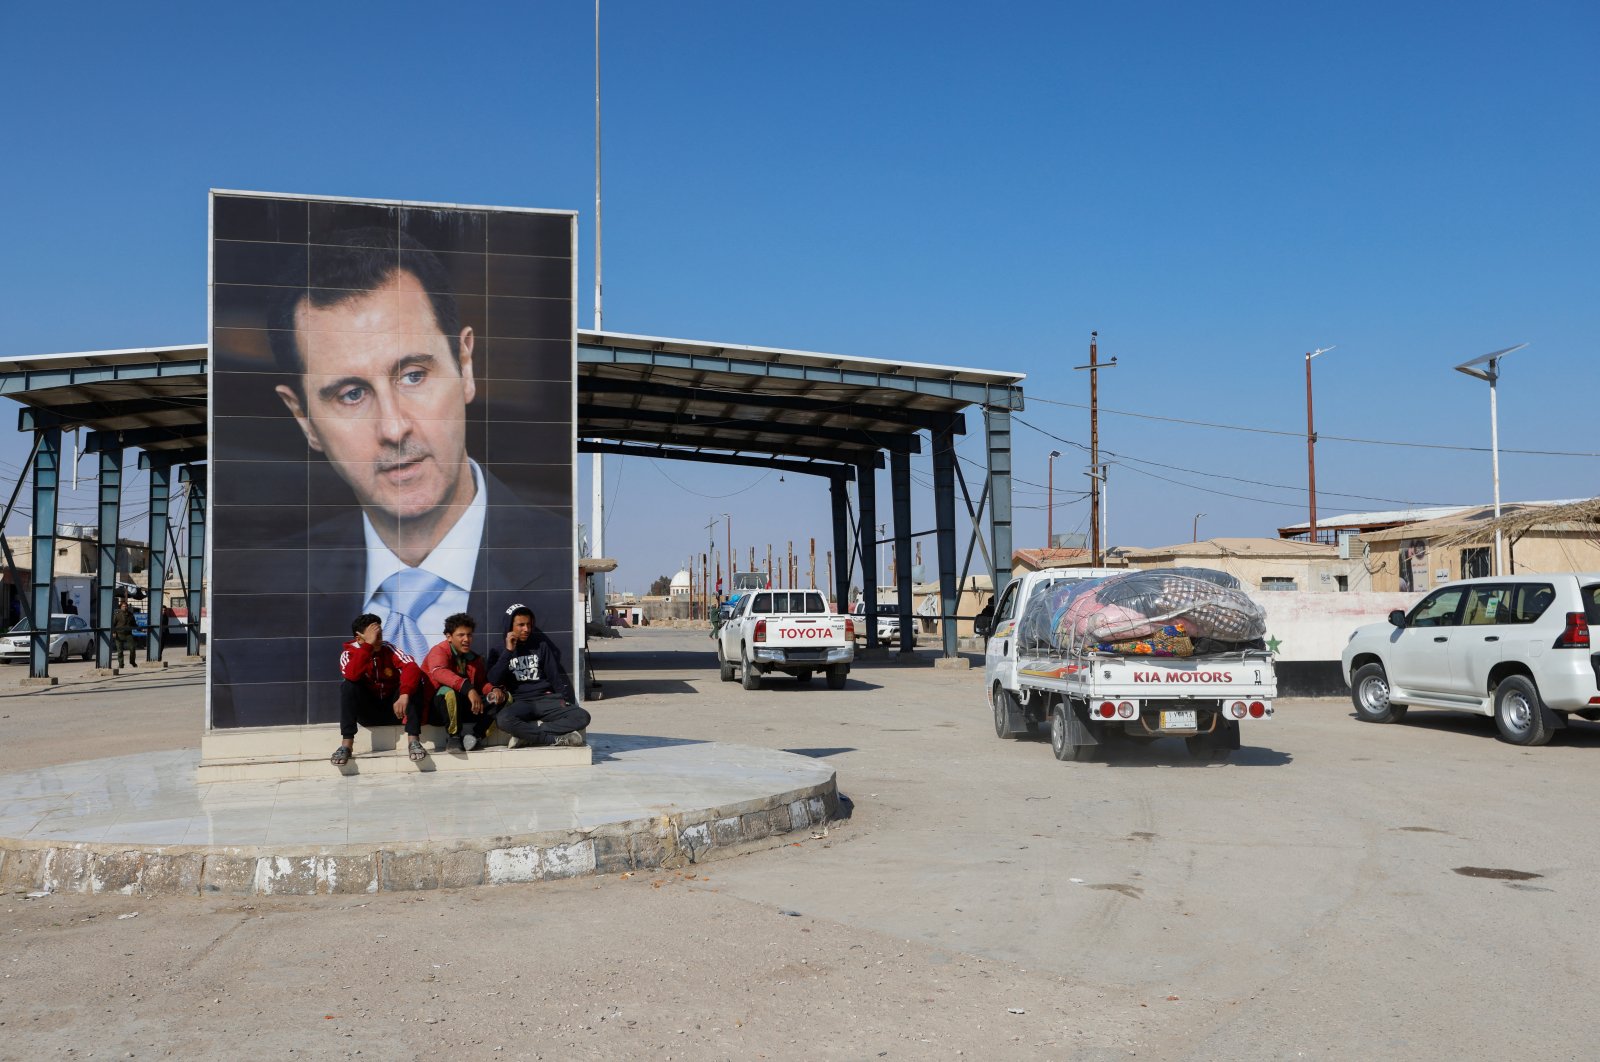 Assad di Suriah dapat mengambil pujian atas kesepakatan penyeberangan bantuan, kata para kritikus